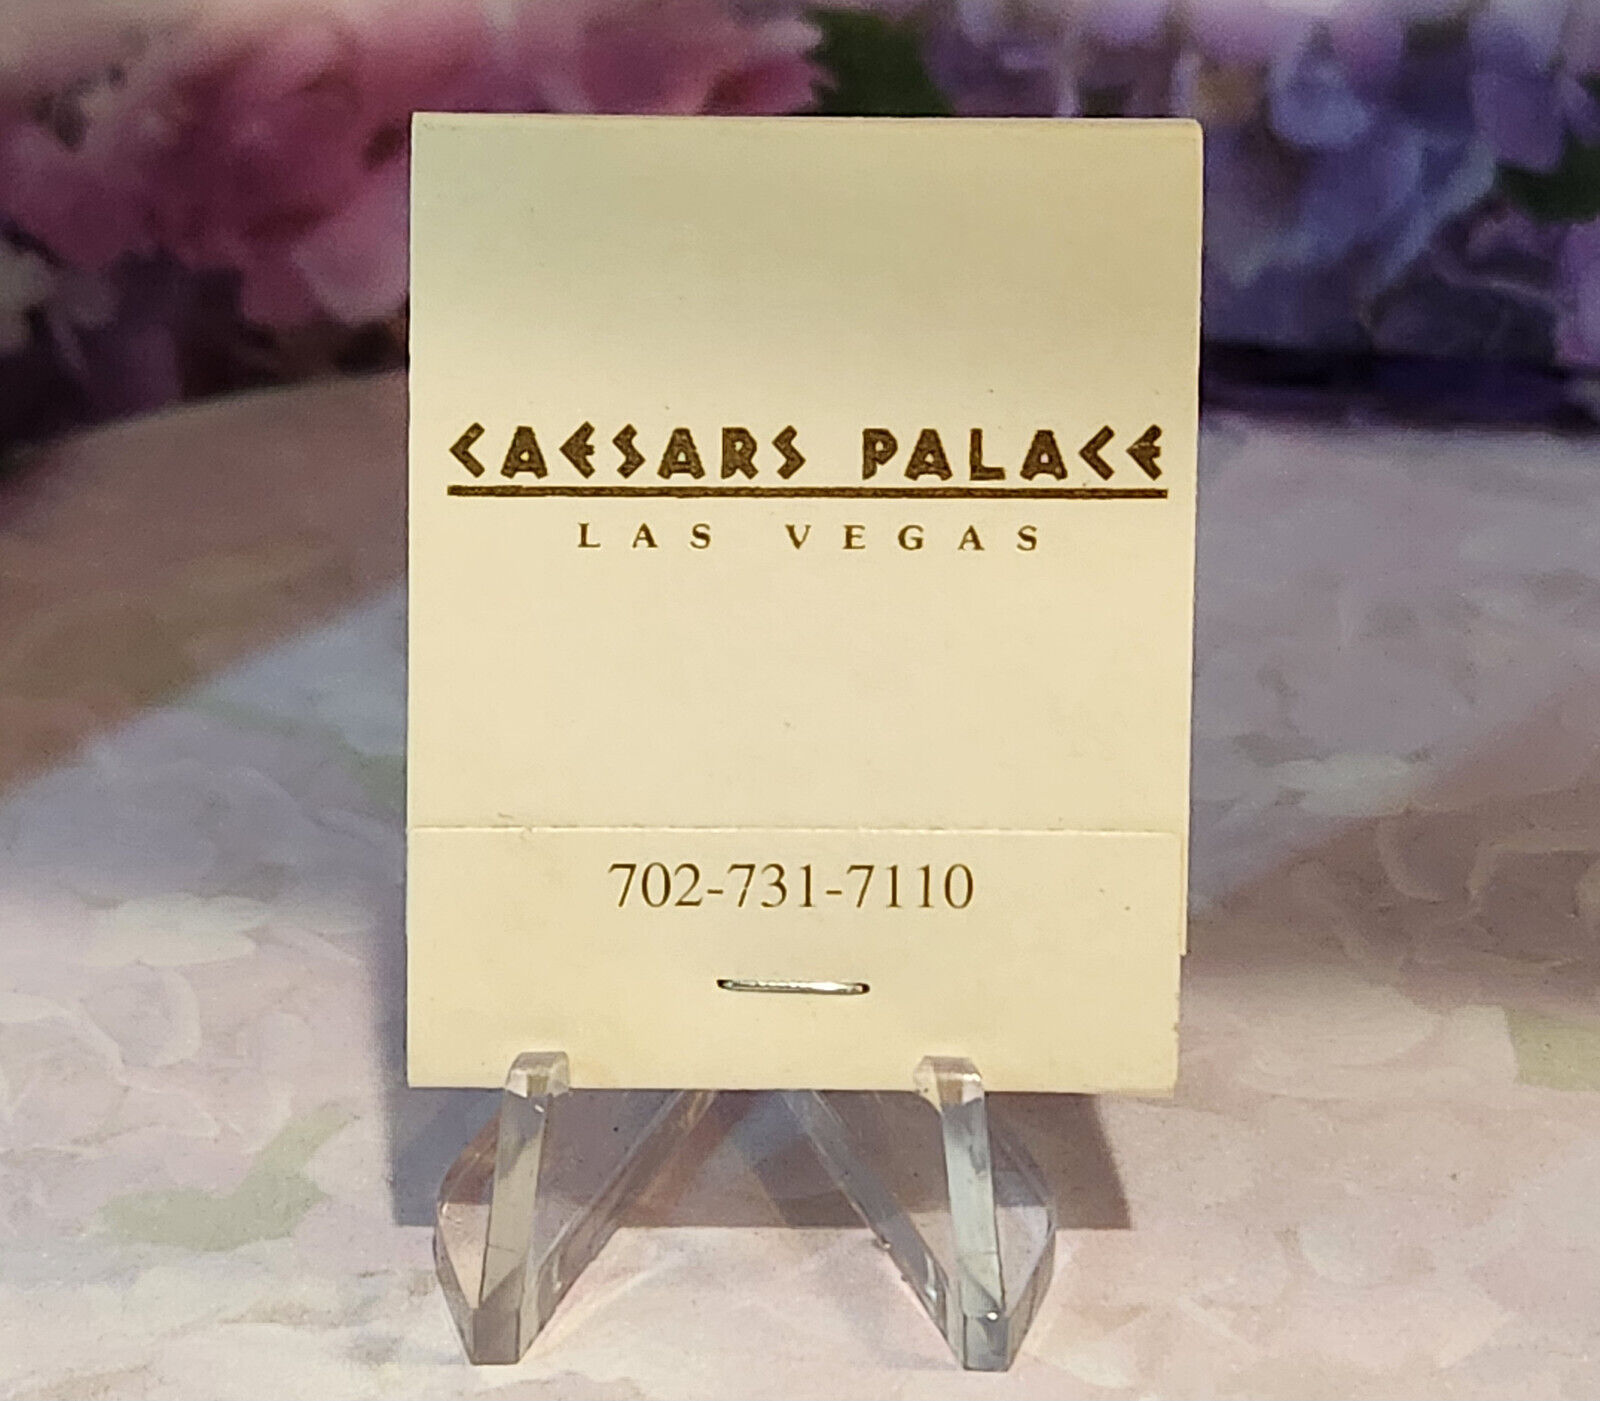 Las Vegas's CAESARS PALACE Match Box -Vintage Matches Memorabilia-refurbished